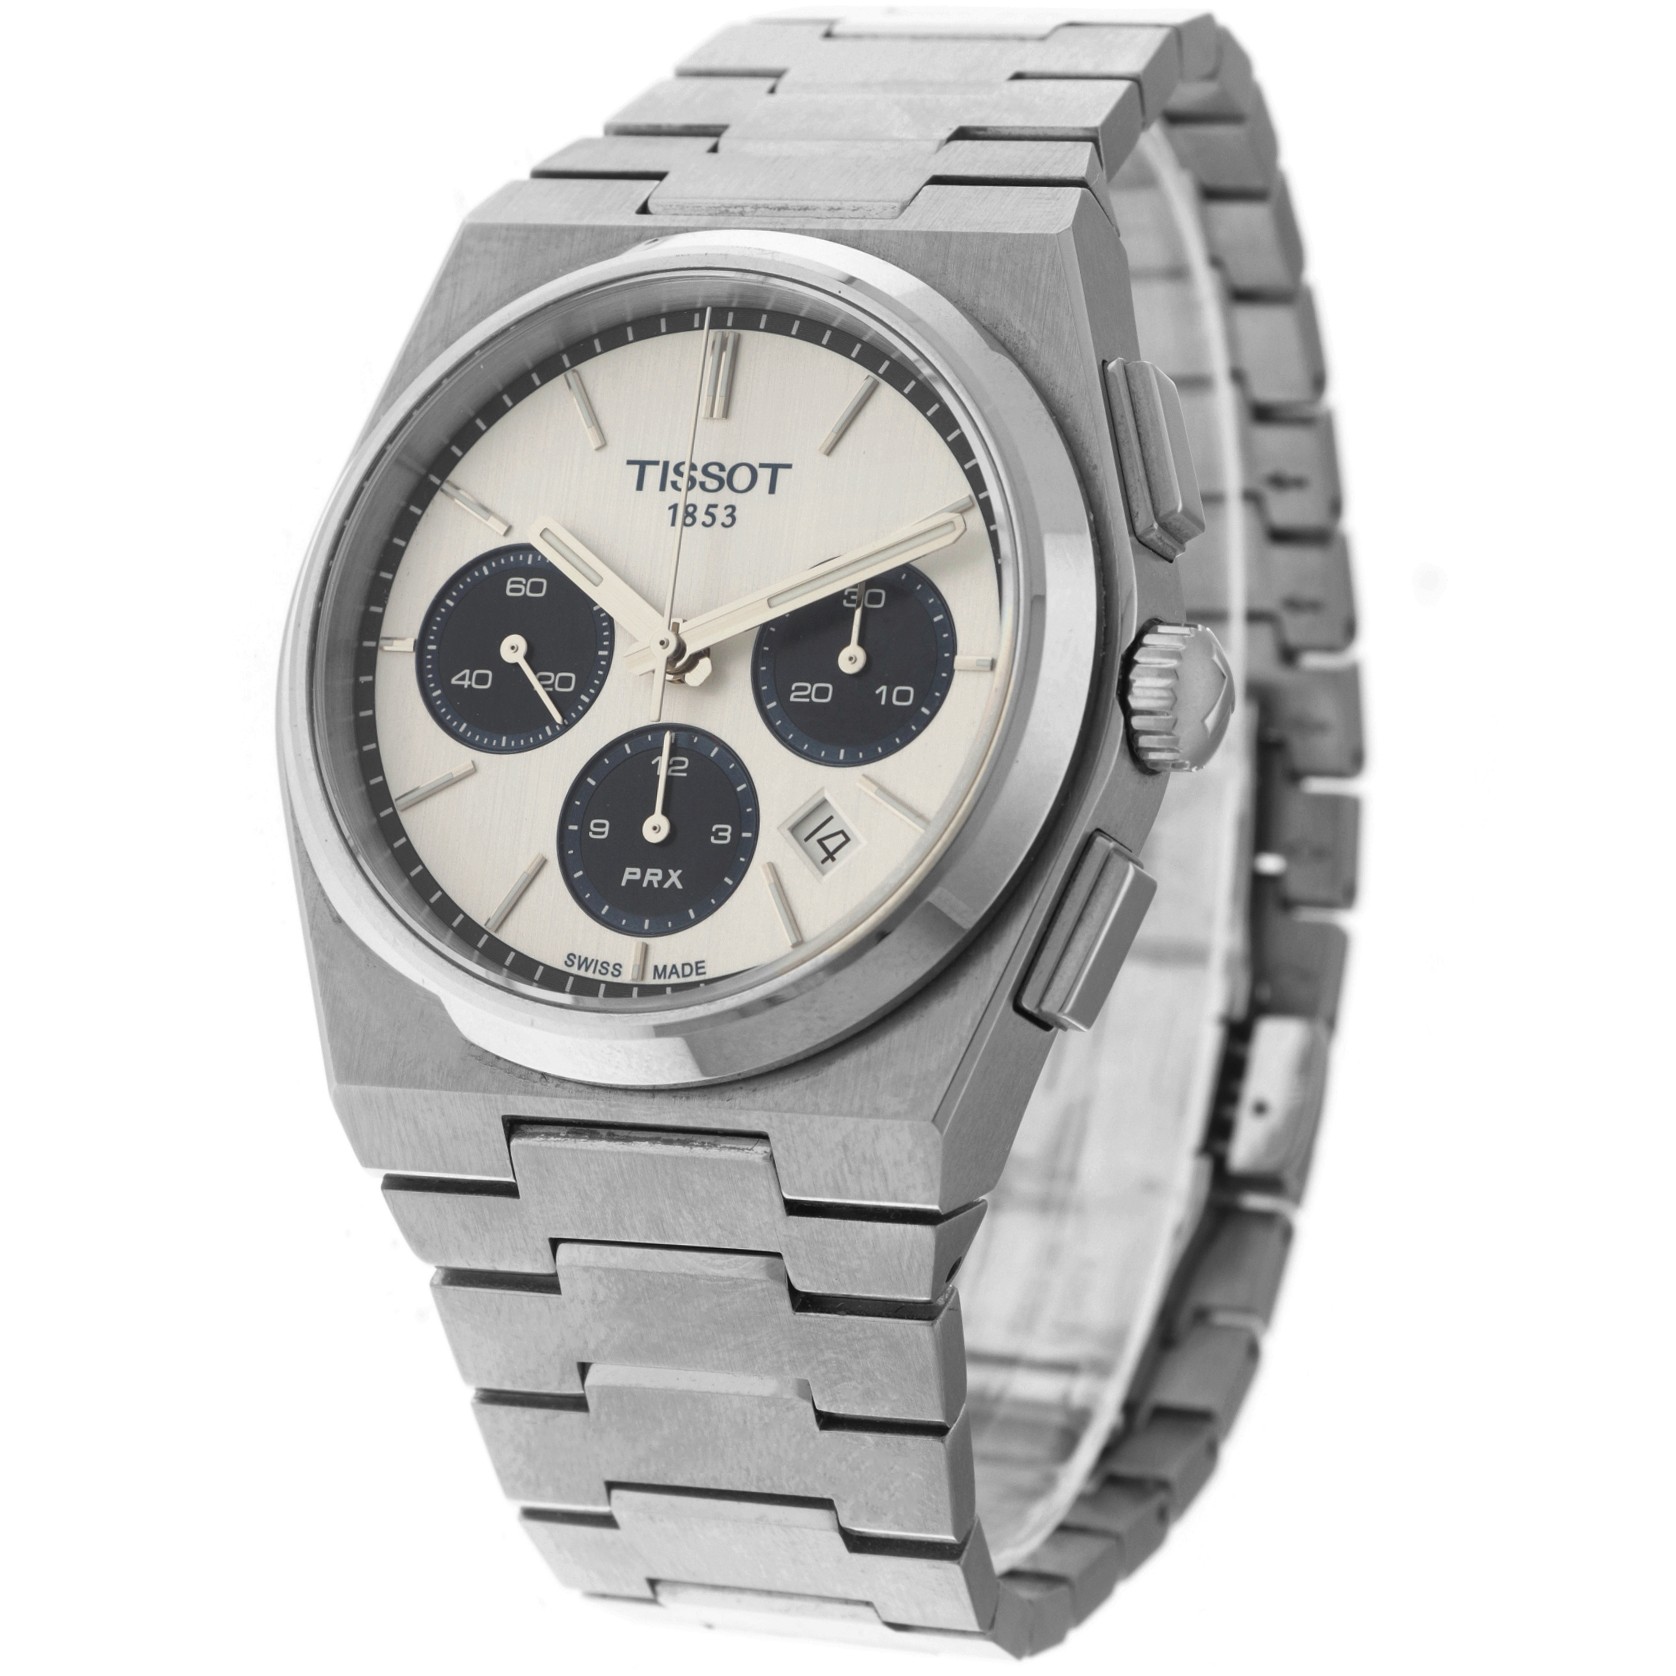 No Reserve - Tissot PRX "Panda" Chronograph T137.427.11.011.01 - Men's watch.  - Image 2 of 6